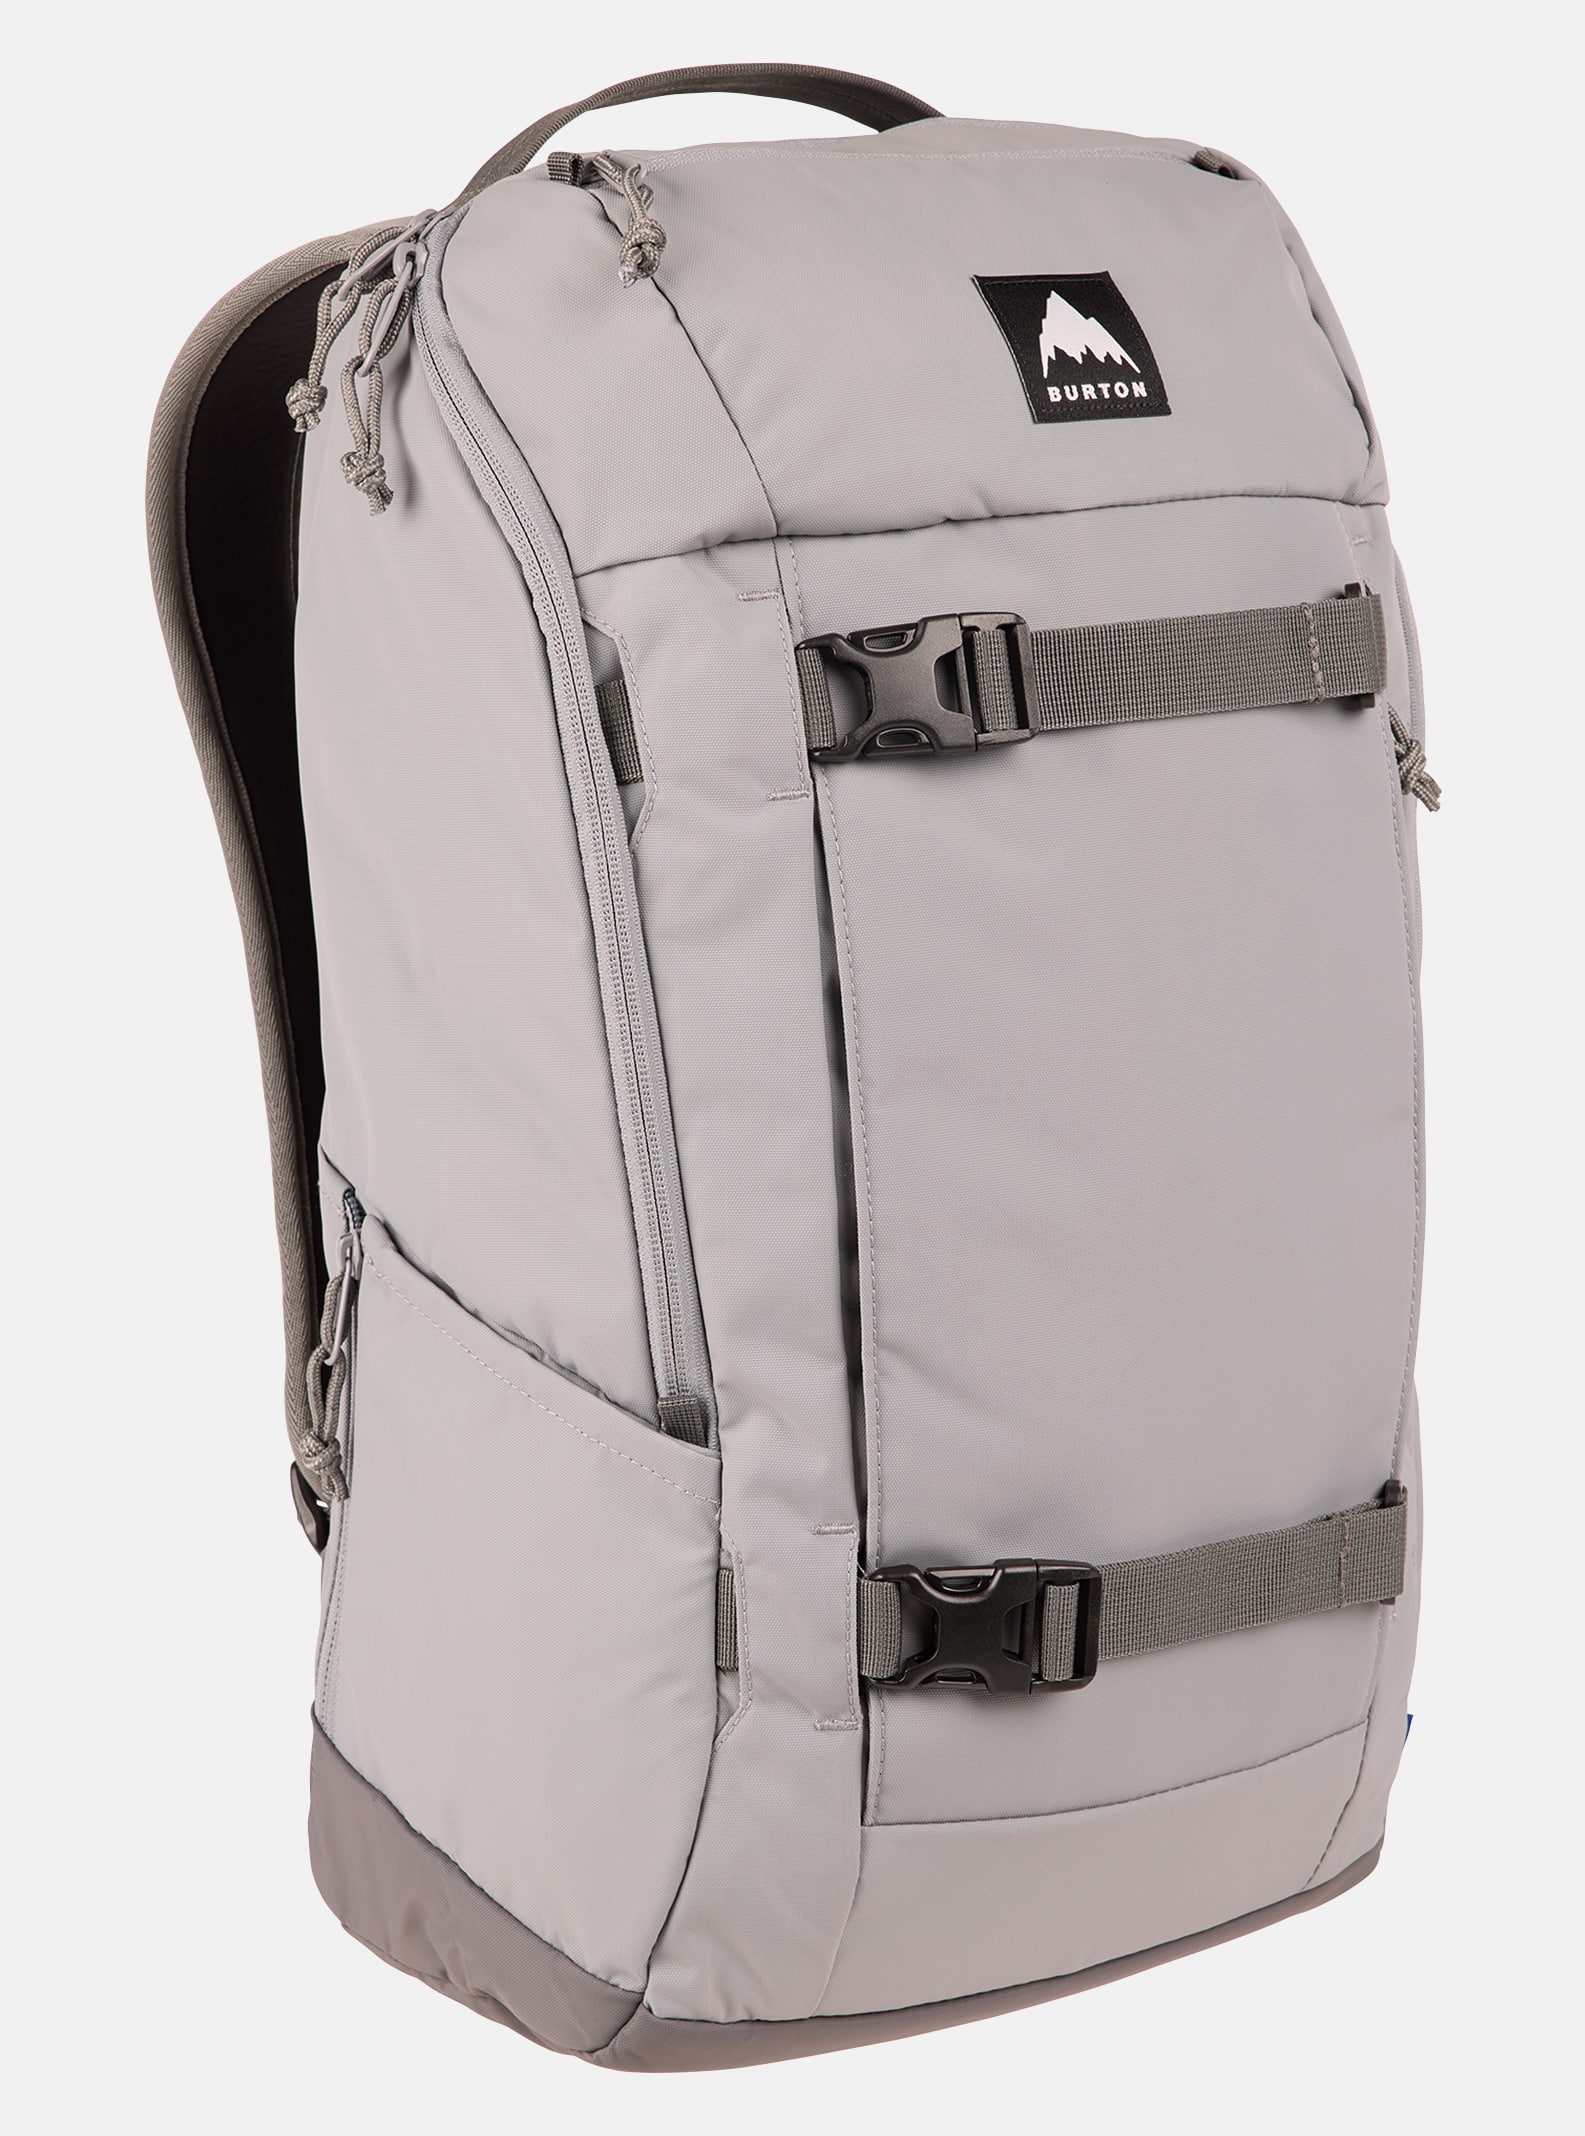 Burton Sale Bags & Luggage | Travel Packs, Duffels & More | Burton  Snowboards US